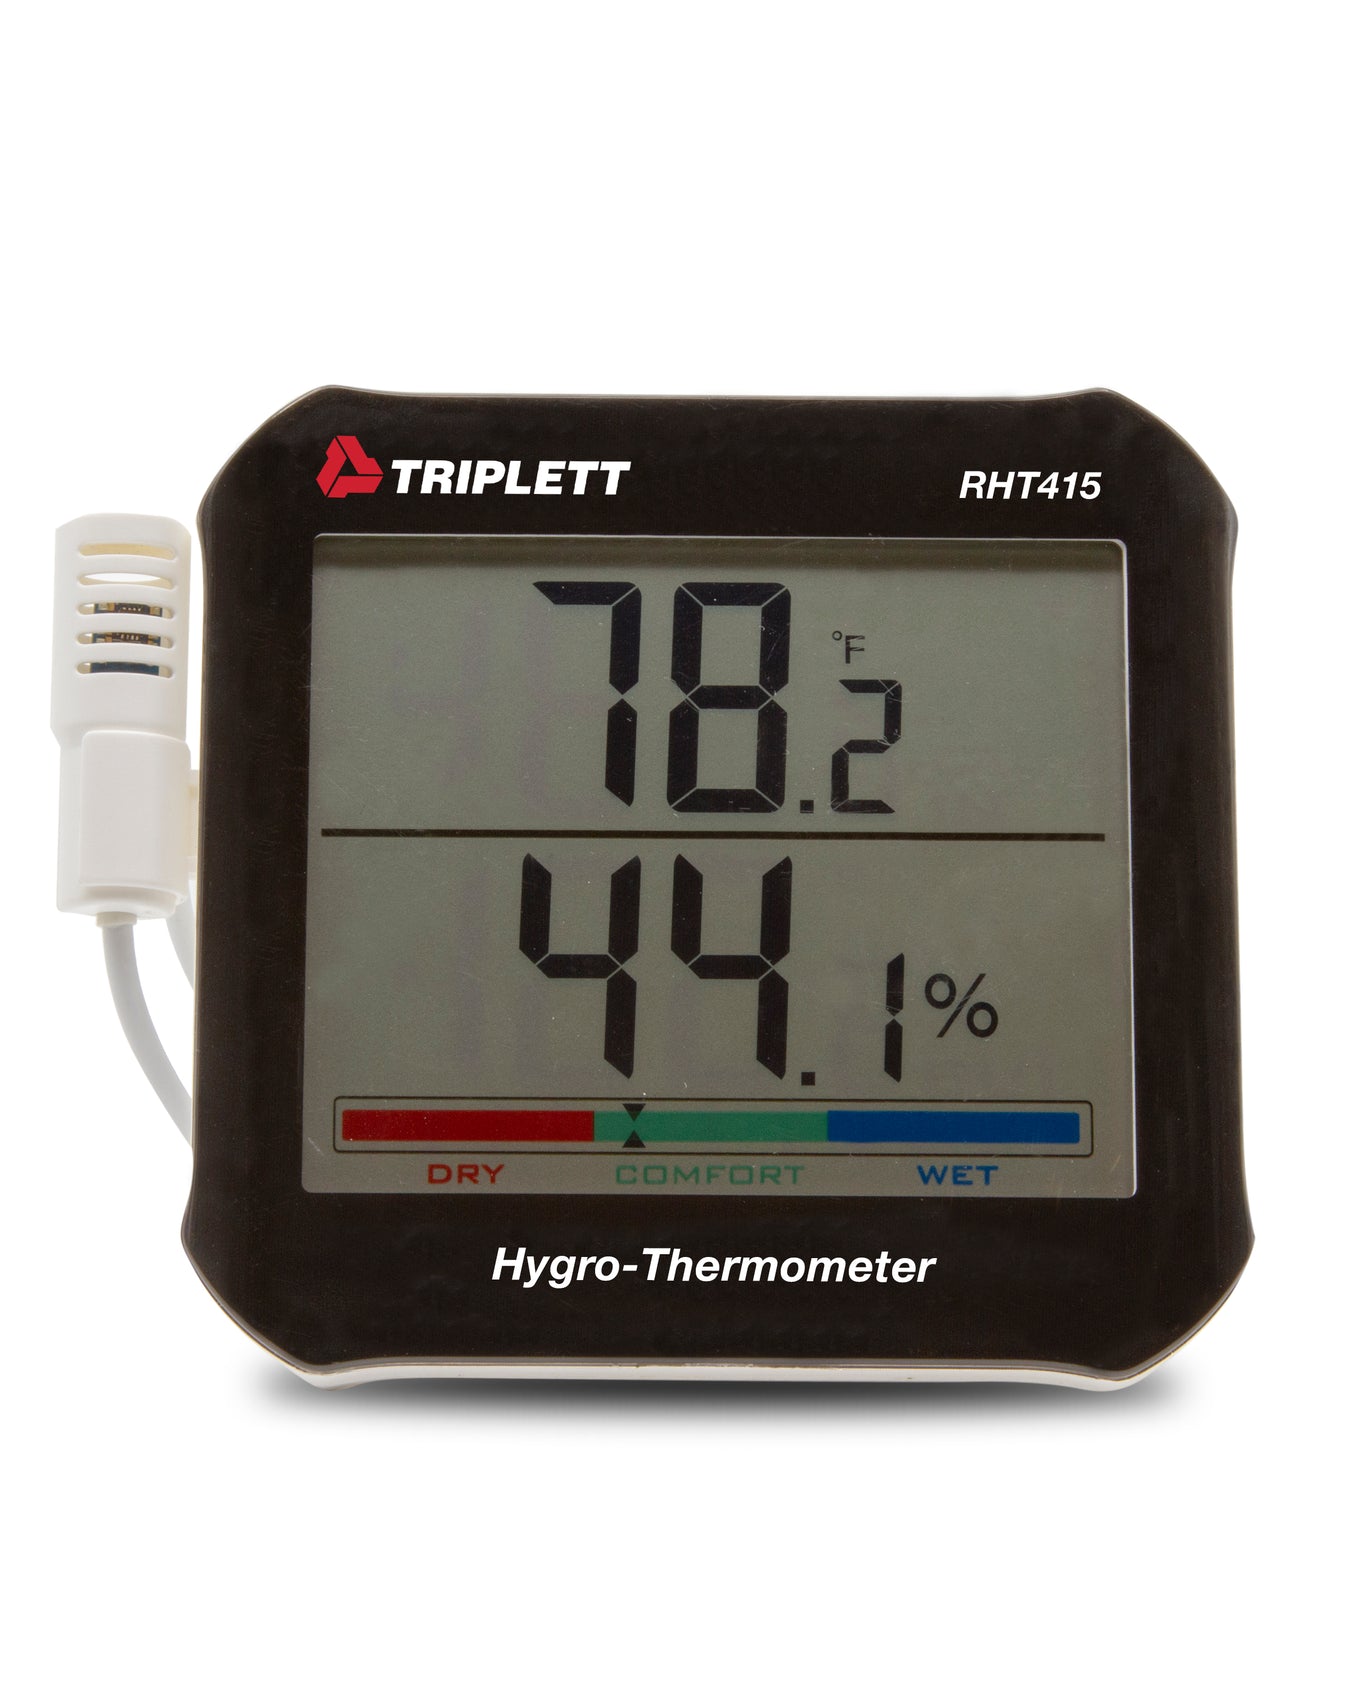 Digital Hygro-Thermometers